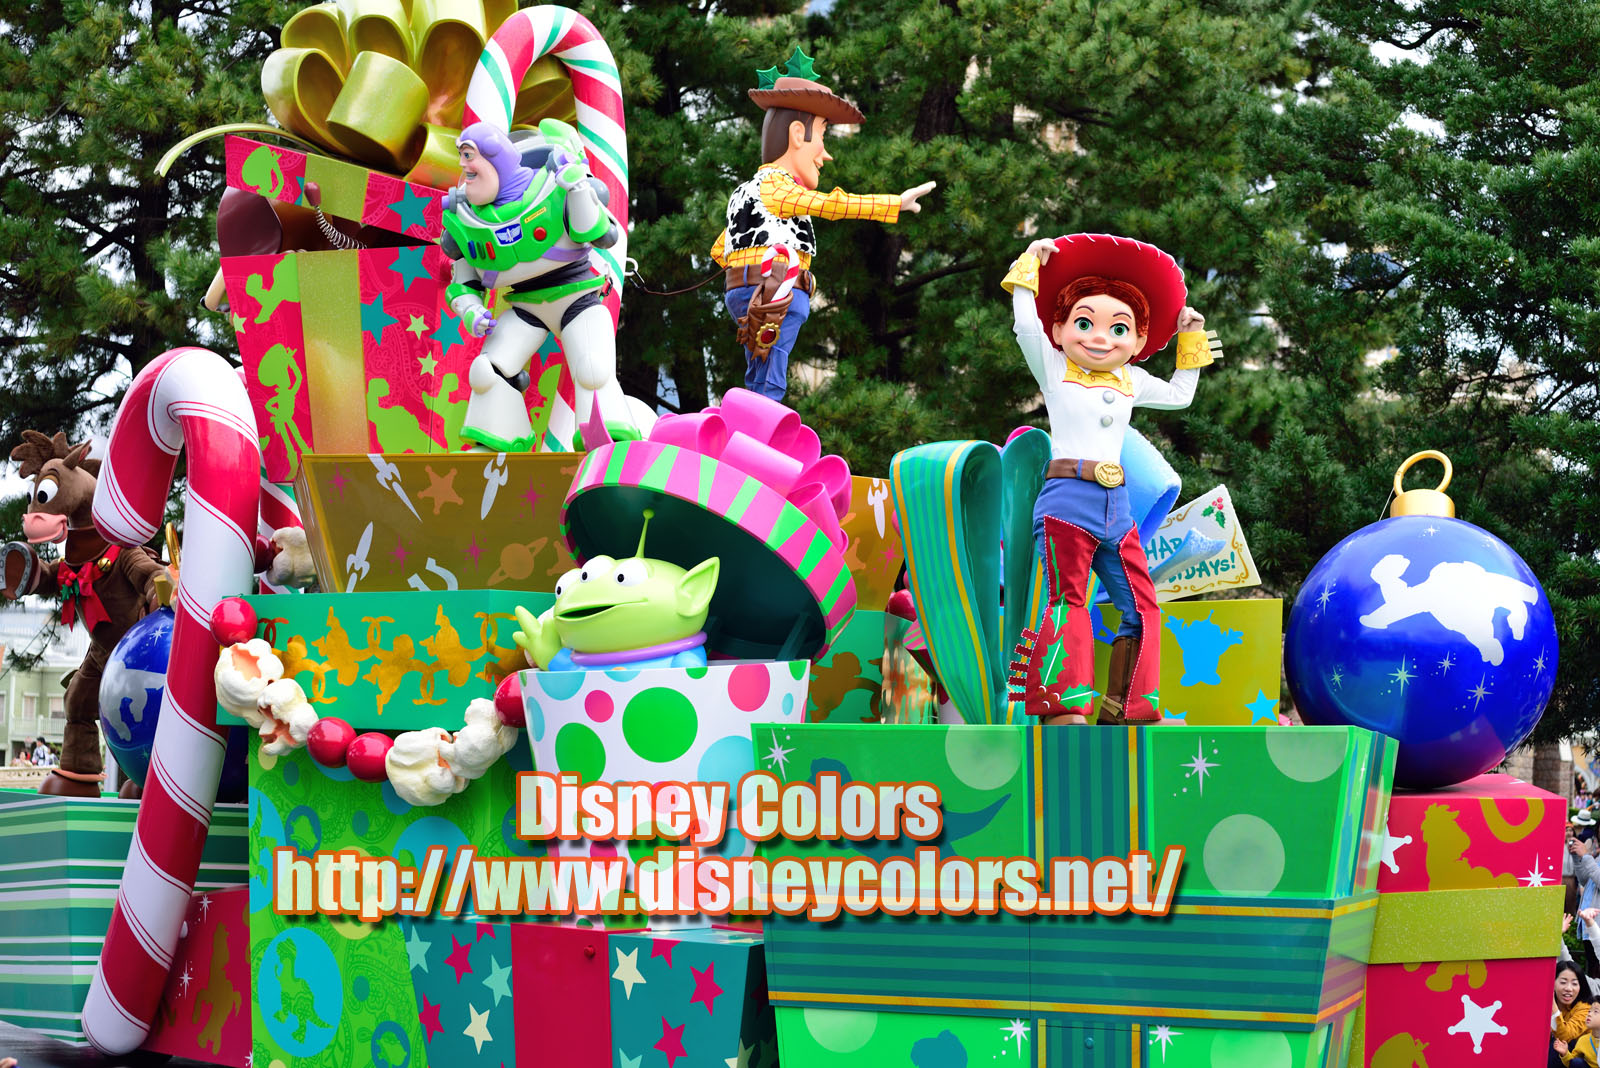 Tdl ディズニー クリスマス ストーリーズ17 フロート停止位置 鑑賞ガイド Disney Colors Event Guide